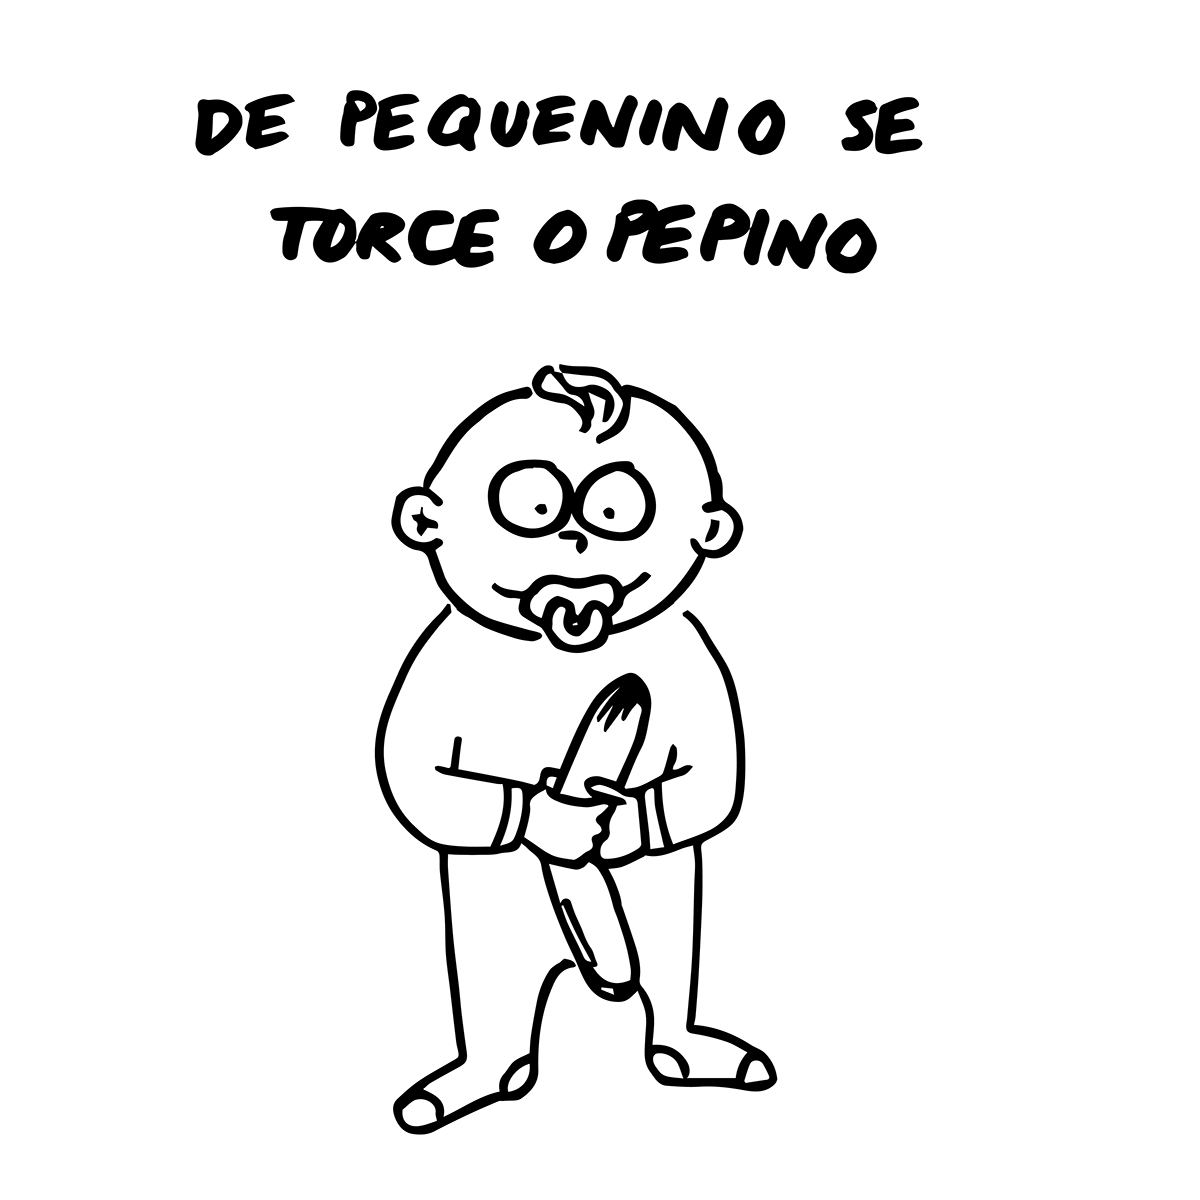 Portuguese expressions Portugal idiomatic expressions ILLUSTRATION  Cartoons